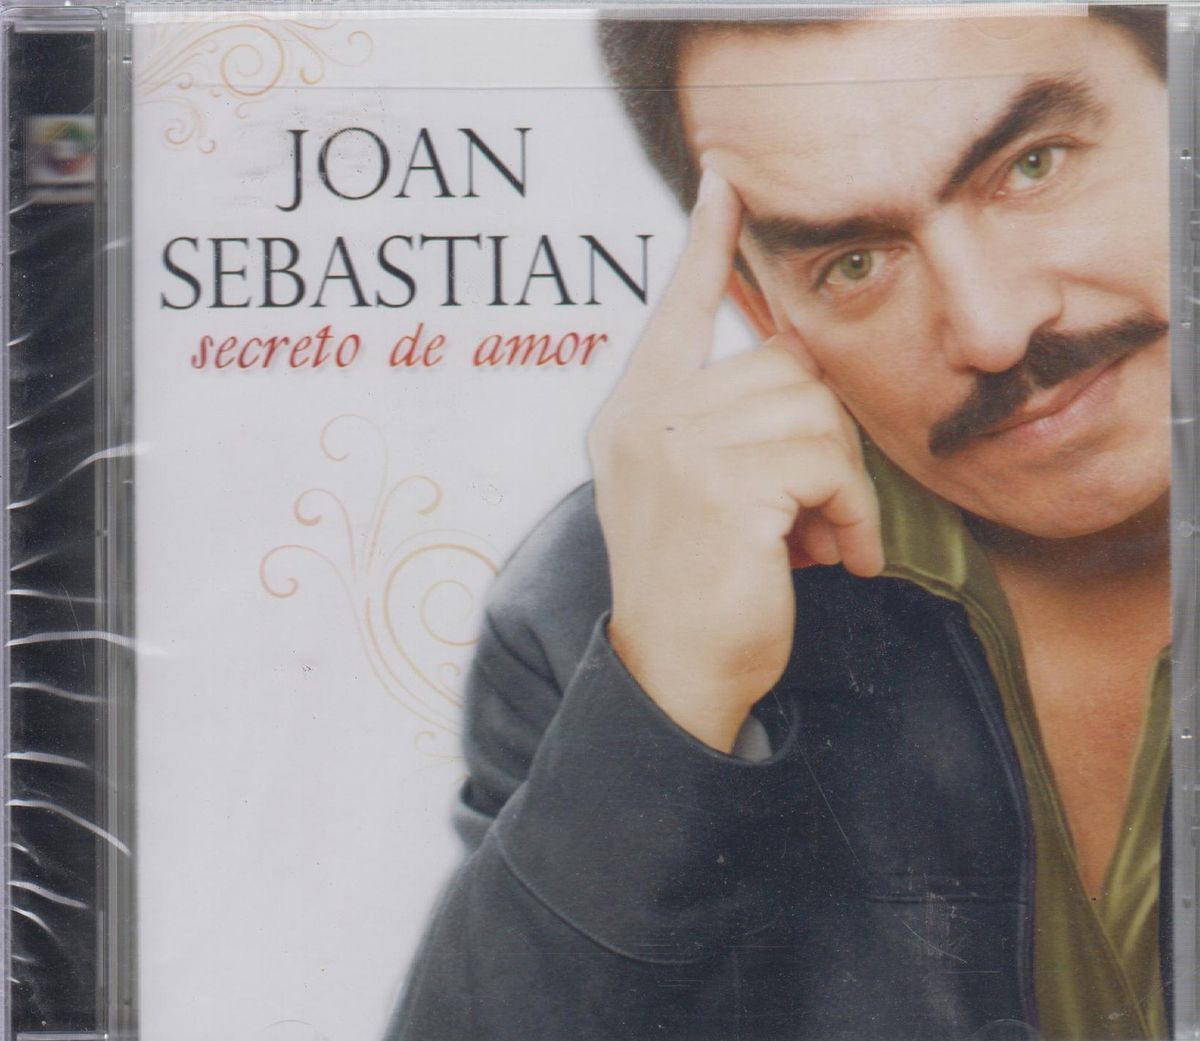 Joan sebastian acordes secreto de amor